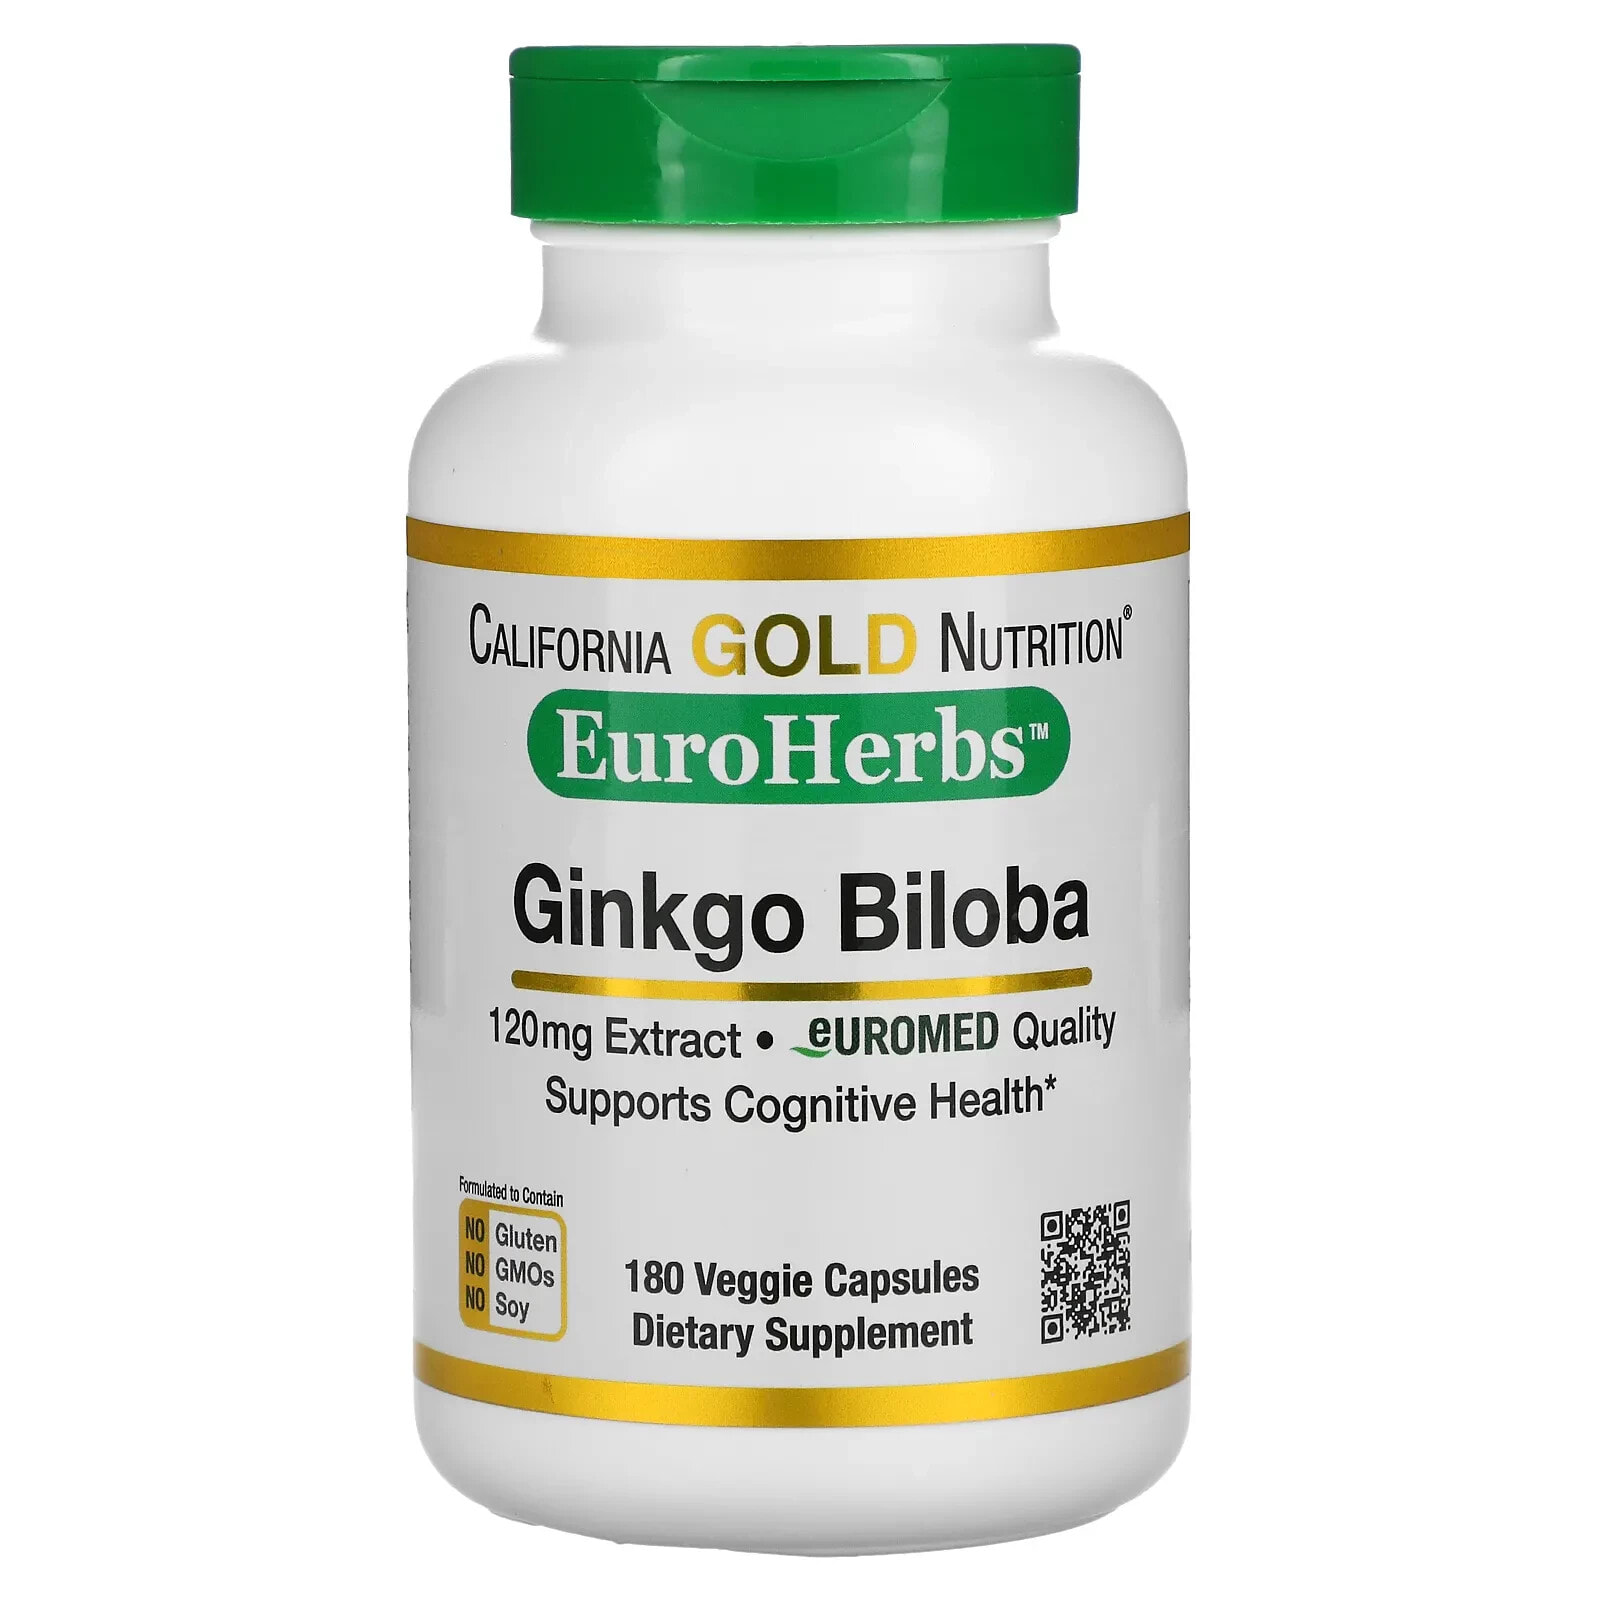 EuroHerbs, Ginkgo Biloba Extract, Euromed Quality, 120 mg, 180 Veggie Capsules